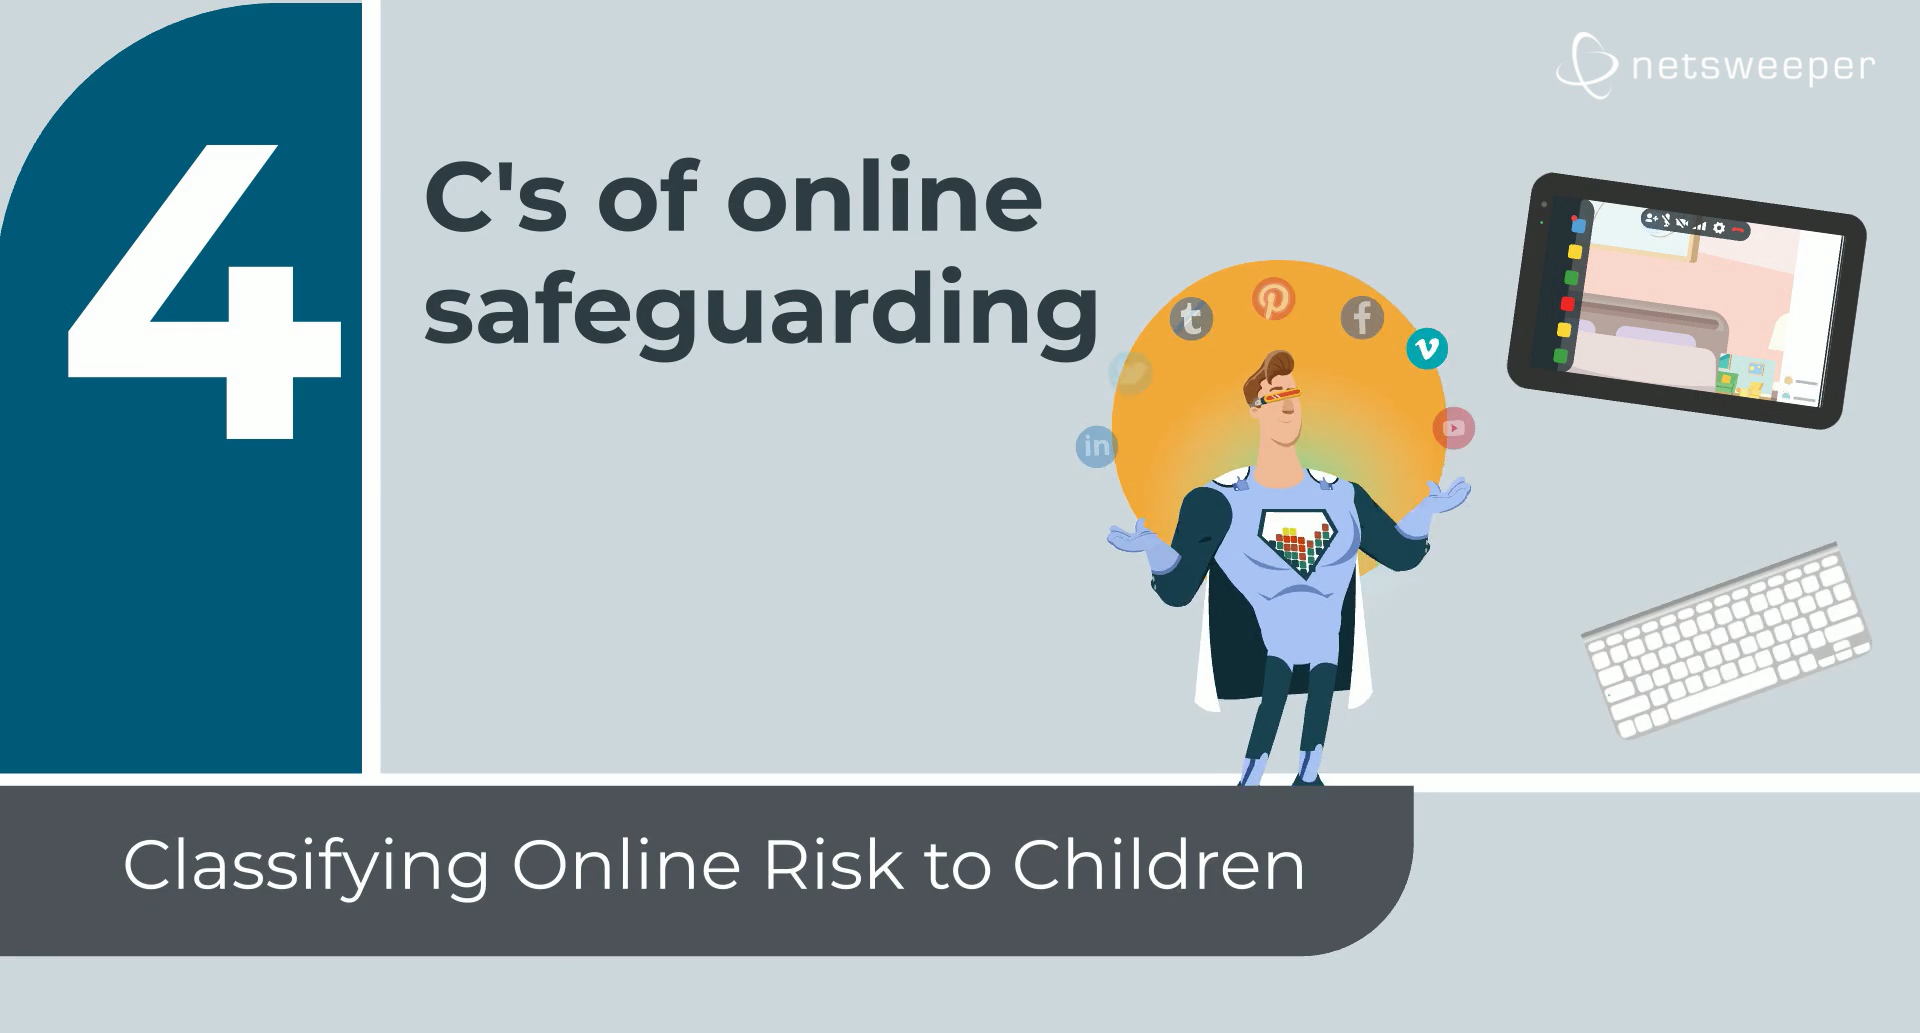 4C's of Online Safeguarding Video